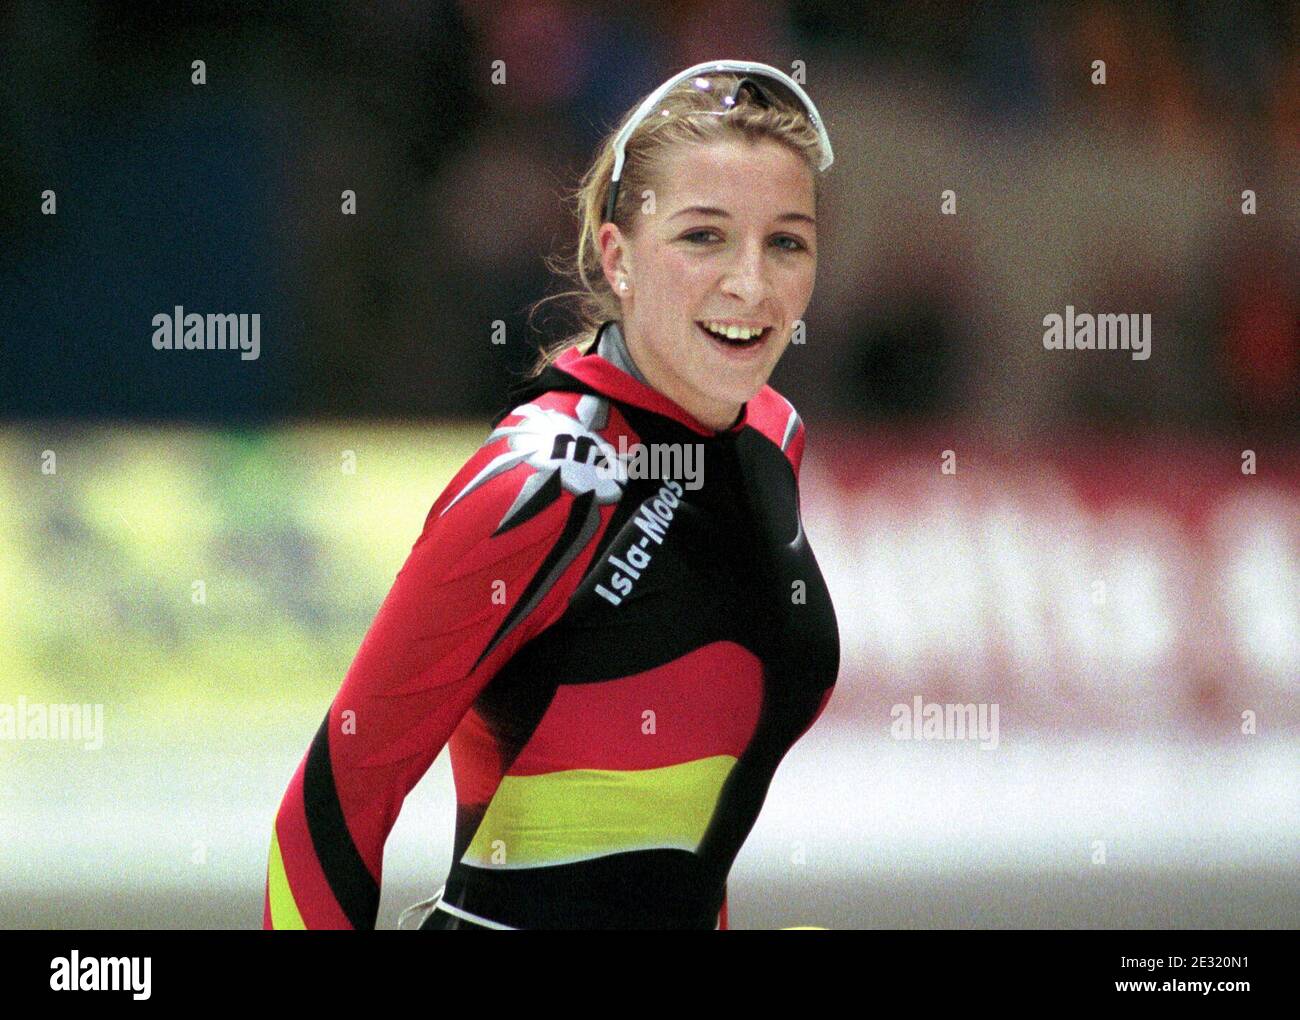 Heerenveen,  the Netherlands, 13.3-15.3.1998 World Allround Speed Skating Championships Anni FRIESINGER (GER) Stock Photo